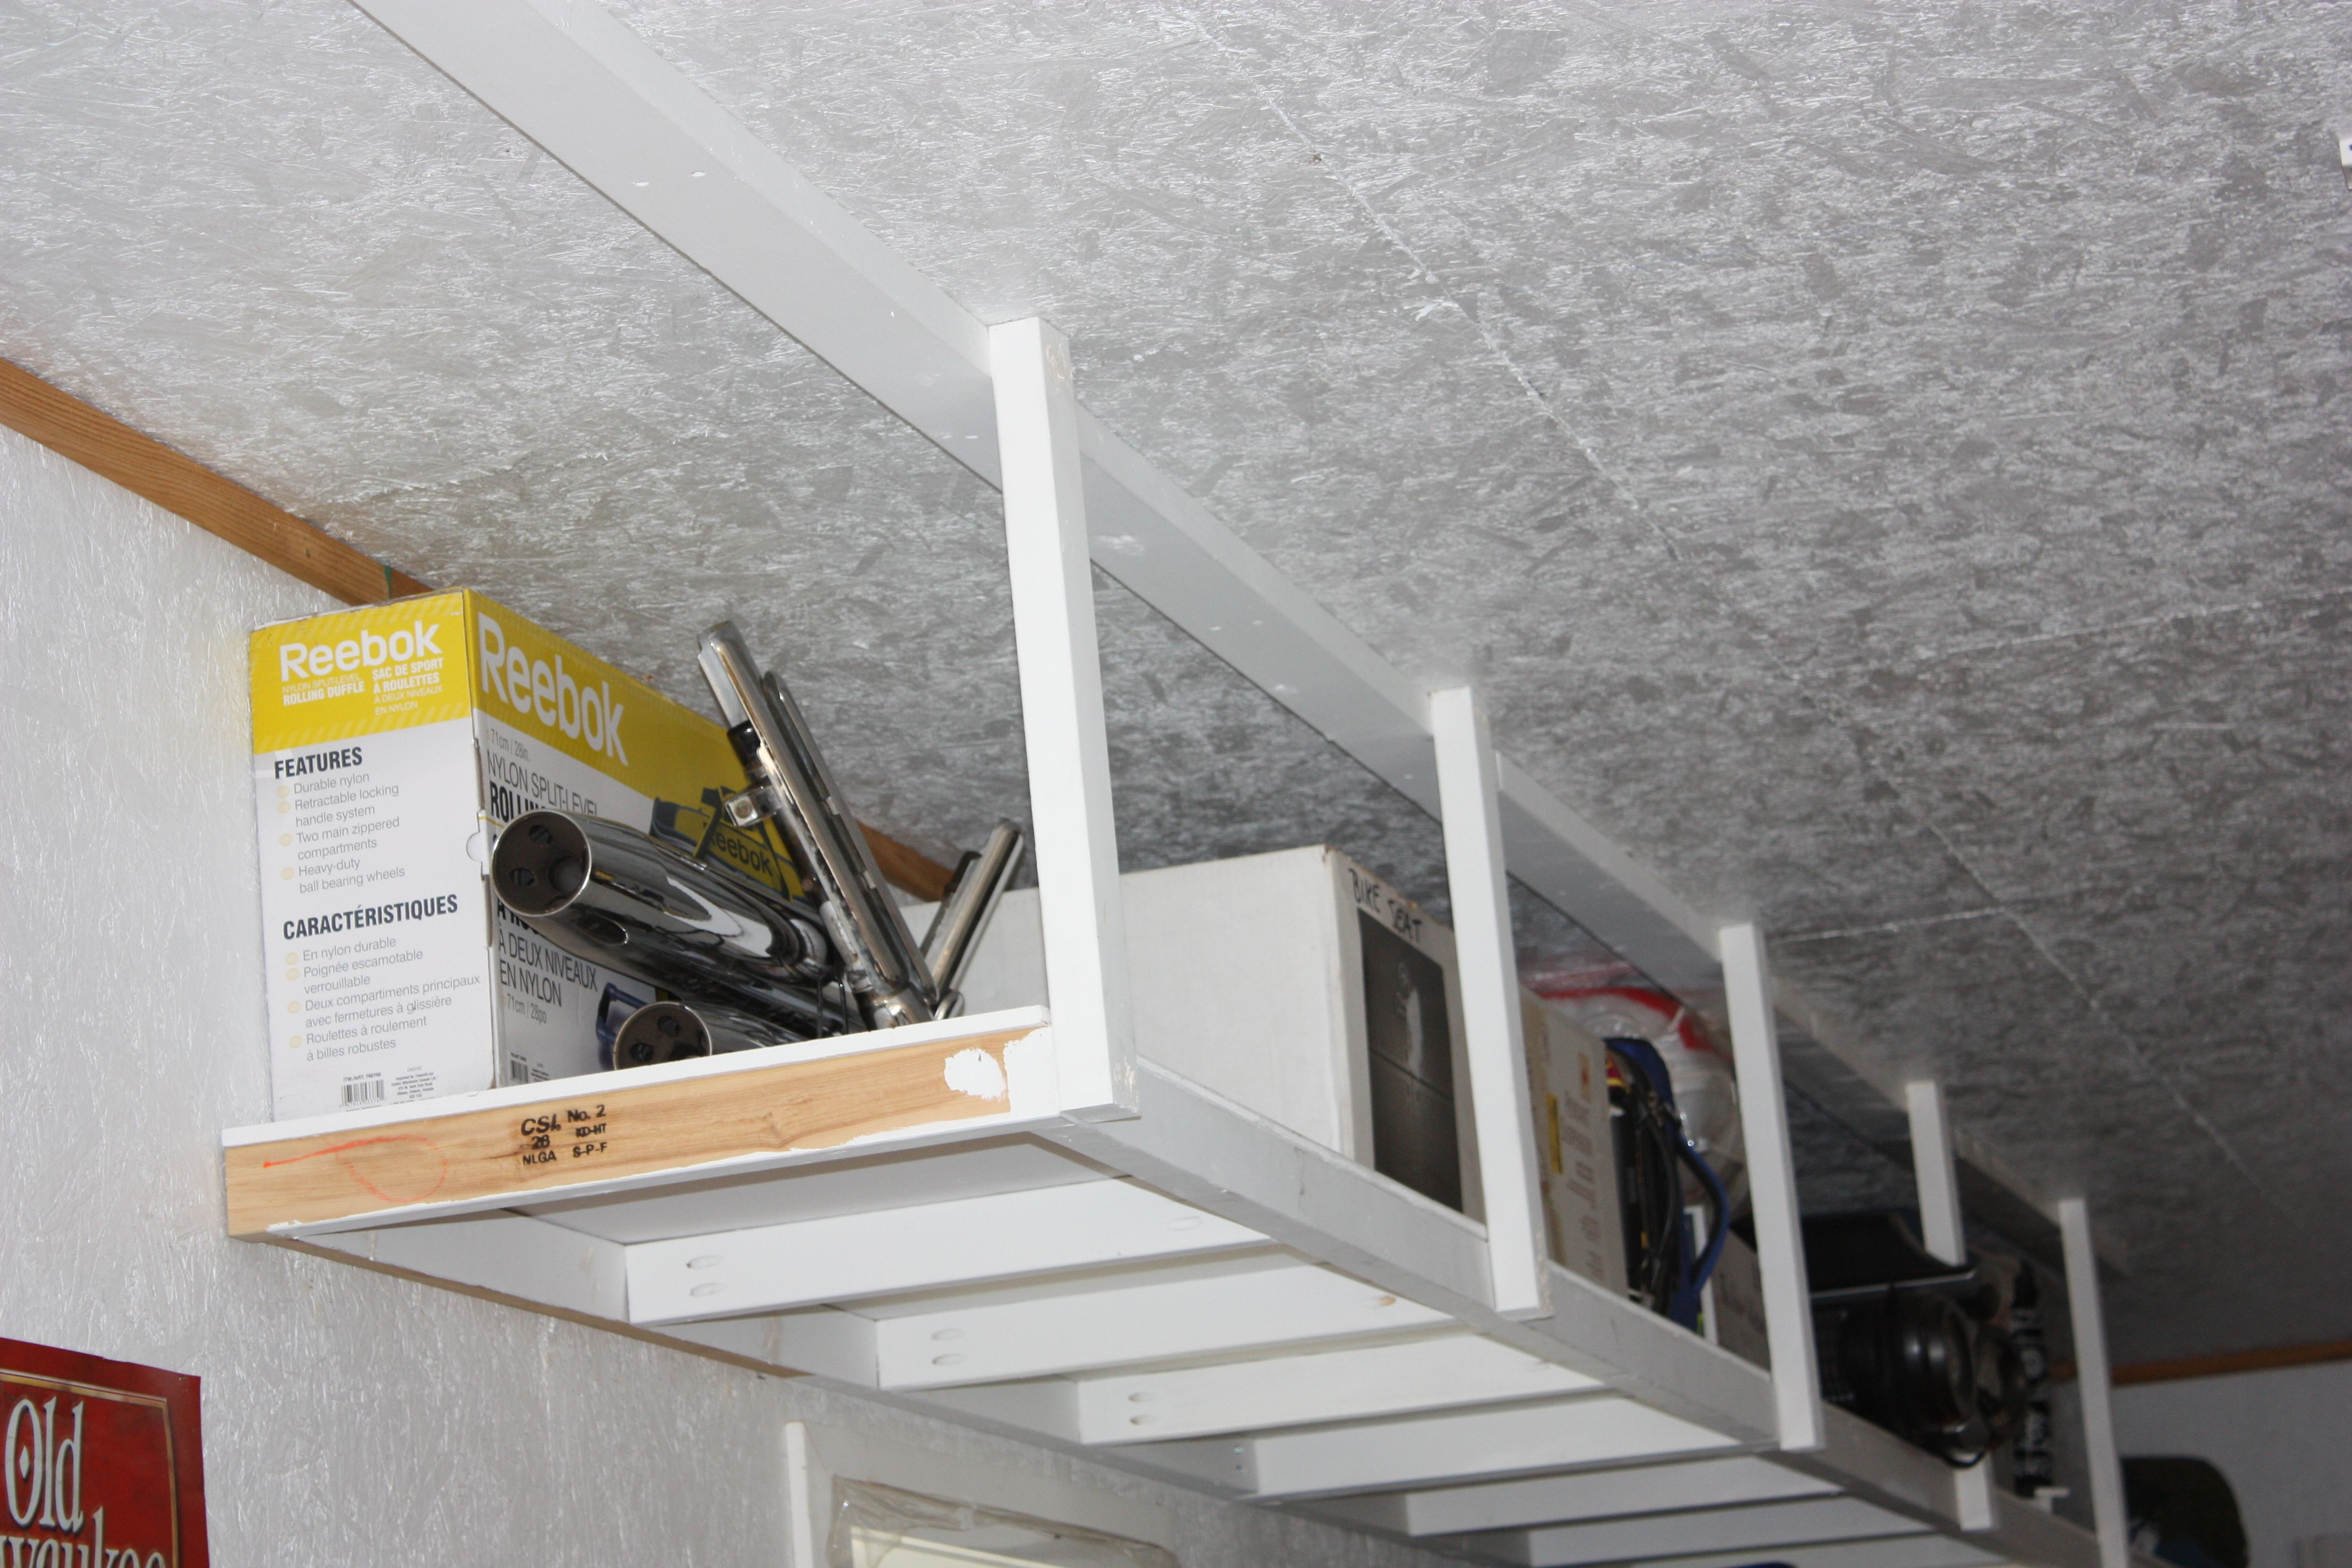 Best ideas about DIY Building An Overhead Garage Storage Shelf
. Save or Pin Overhead Garage Storage Now.